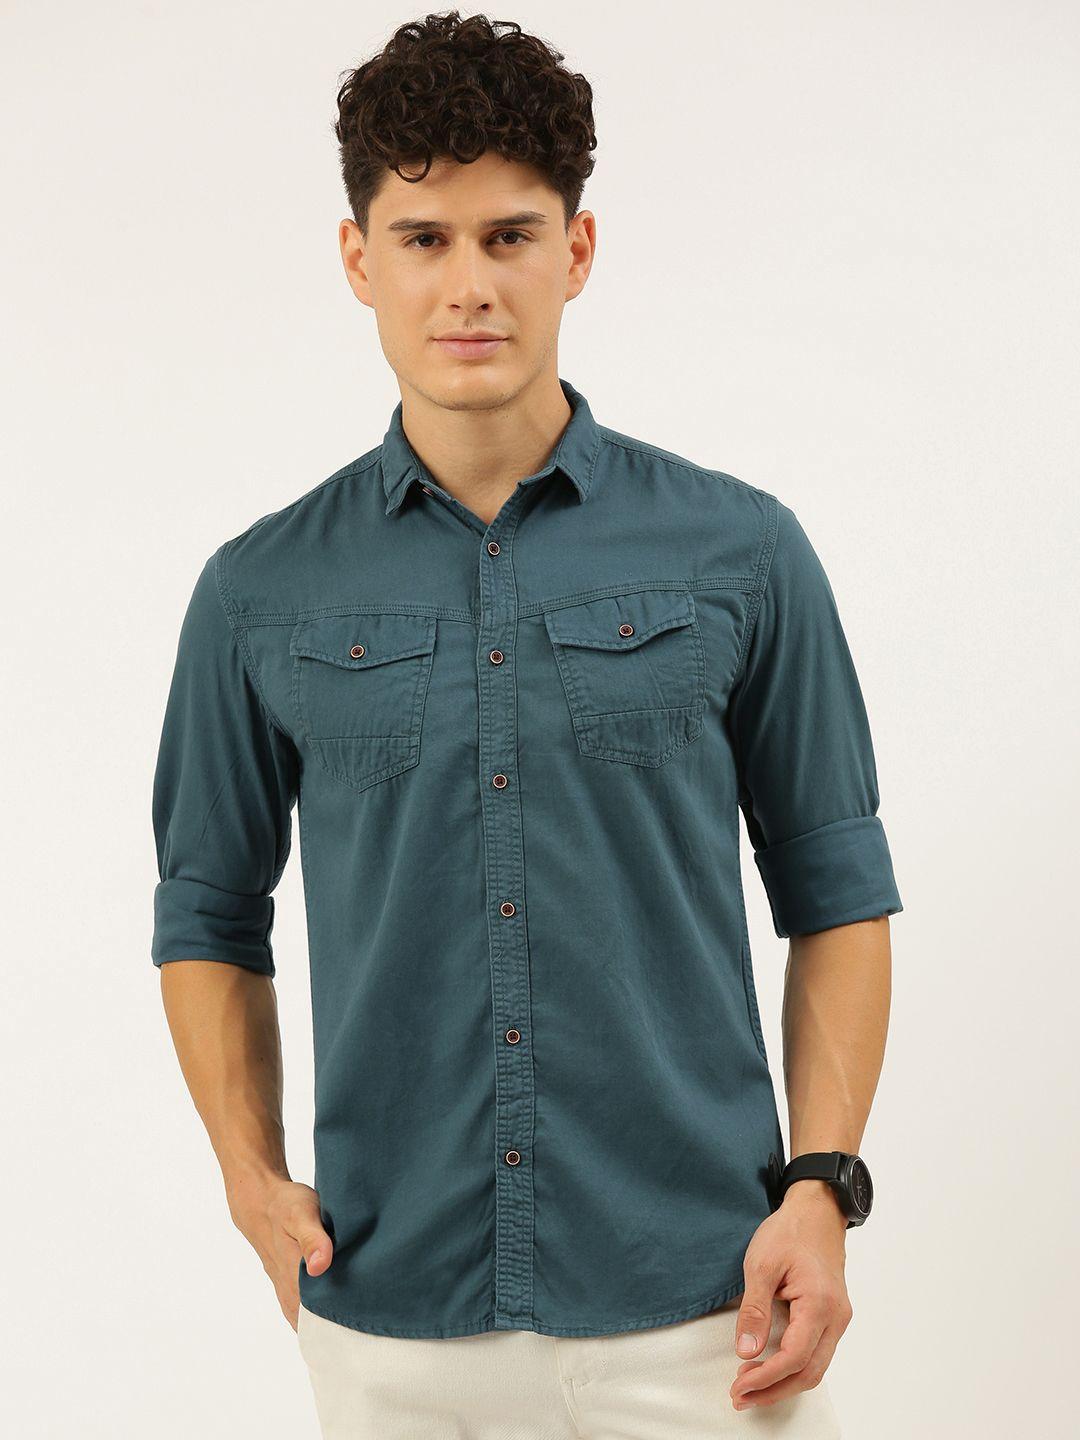 ivoc men teal blue pure cotton standard slim fit casual shirt